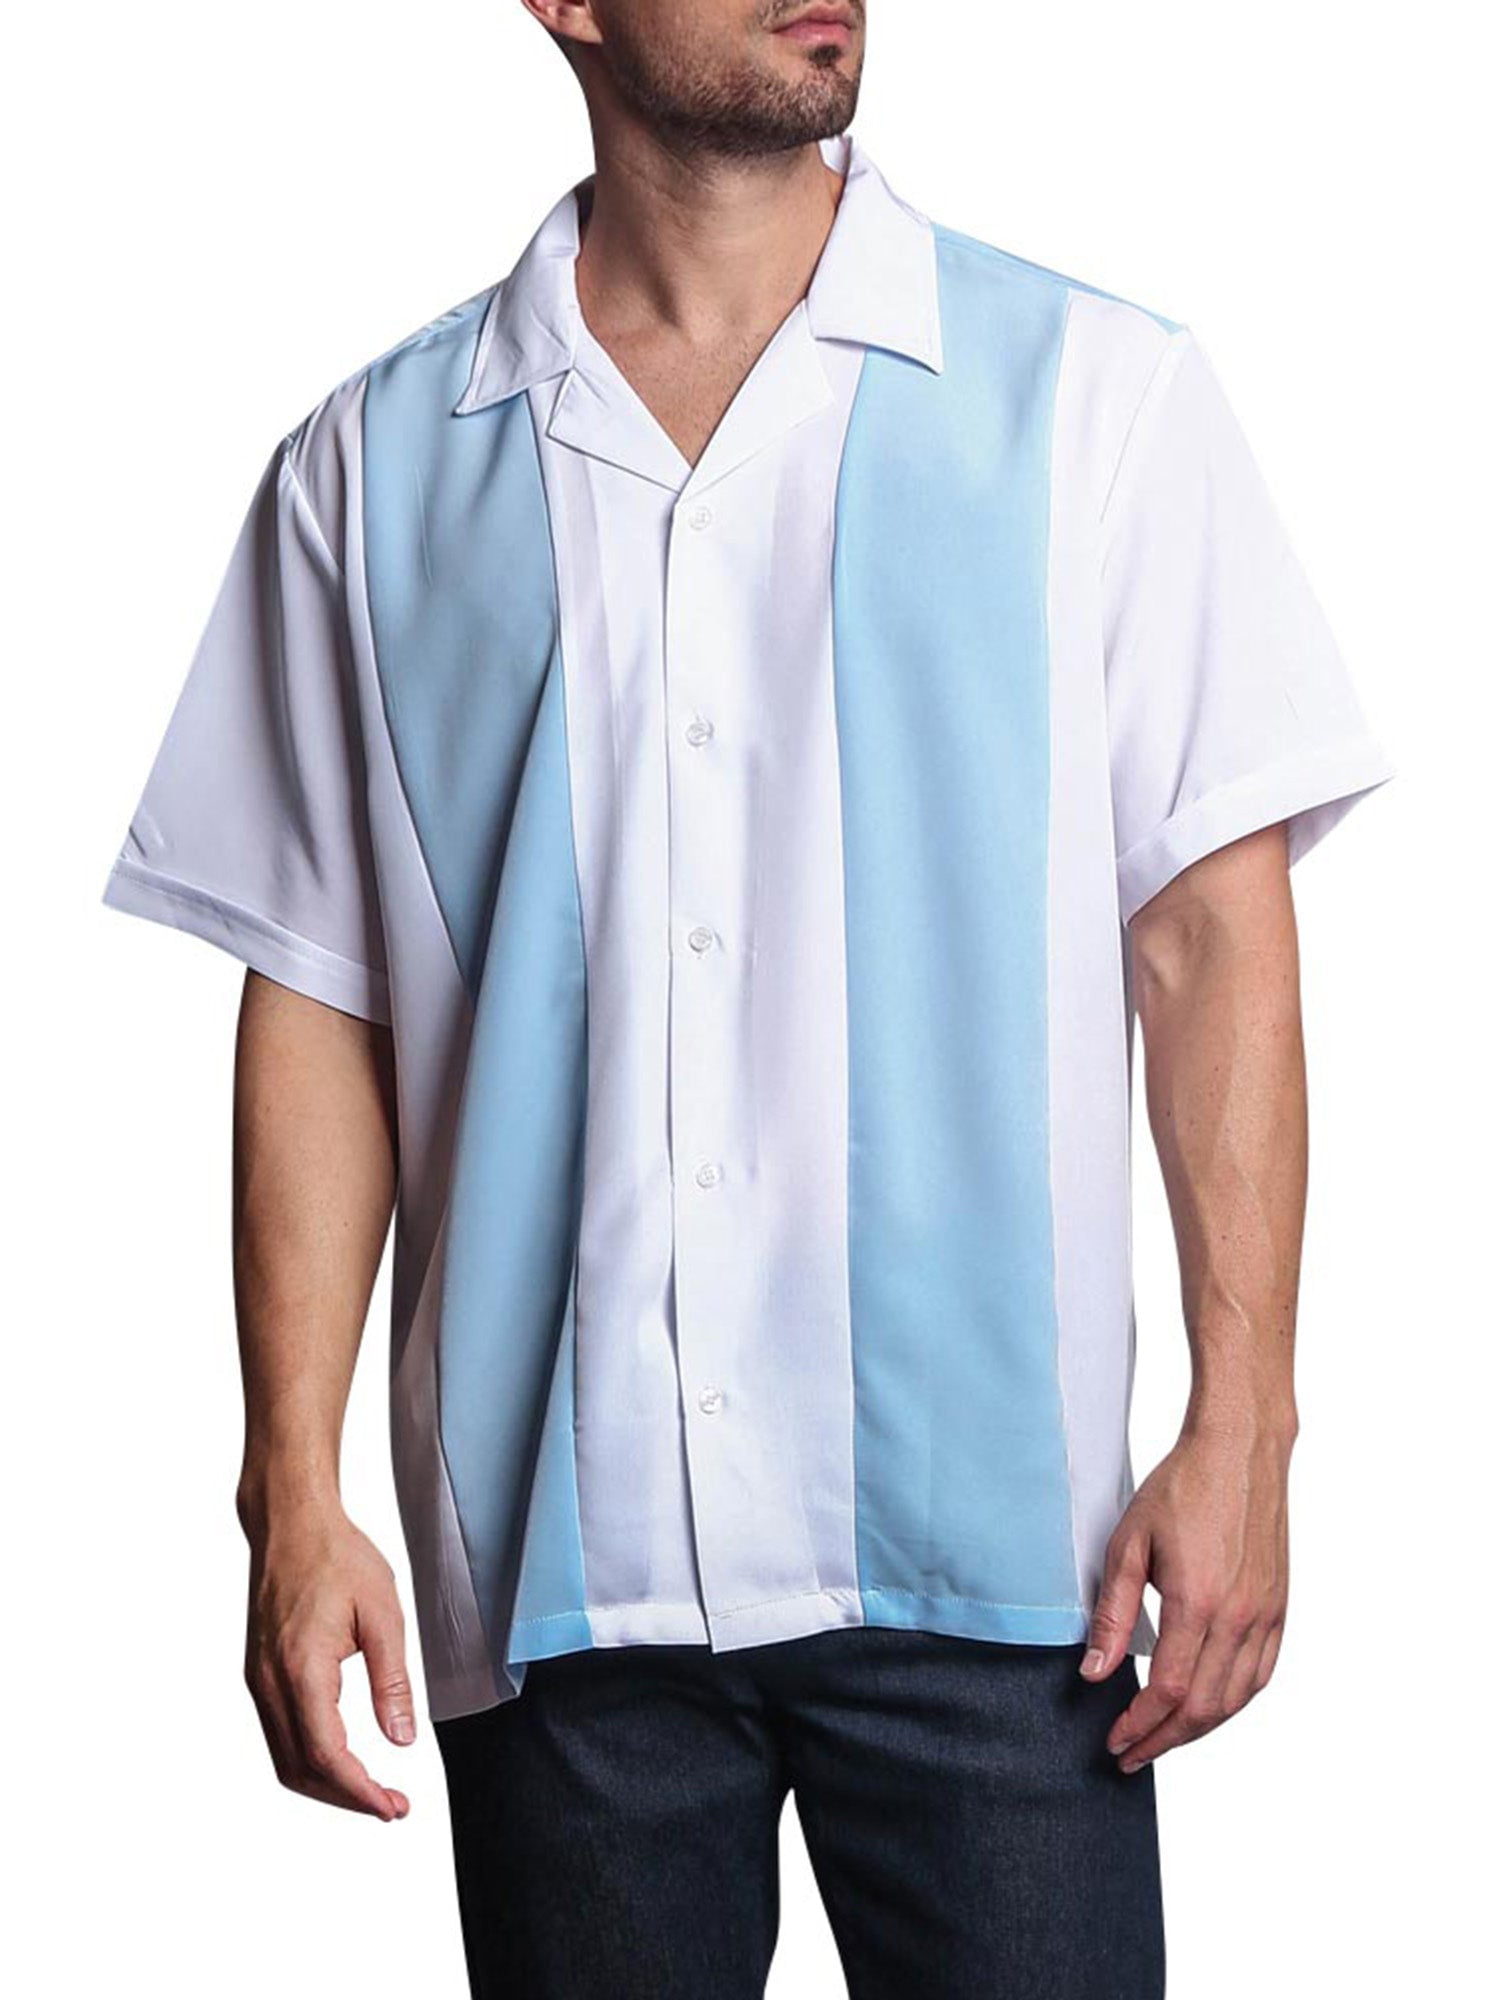 Rapala Bass Bowling Shirt Zip Jersey For Men Tee Shirt Rapala Jersey Size  S-5XL